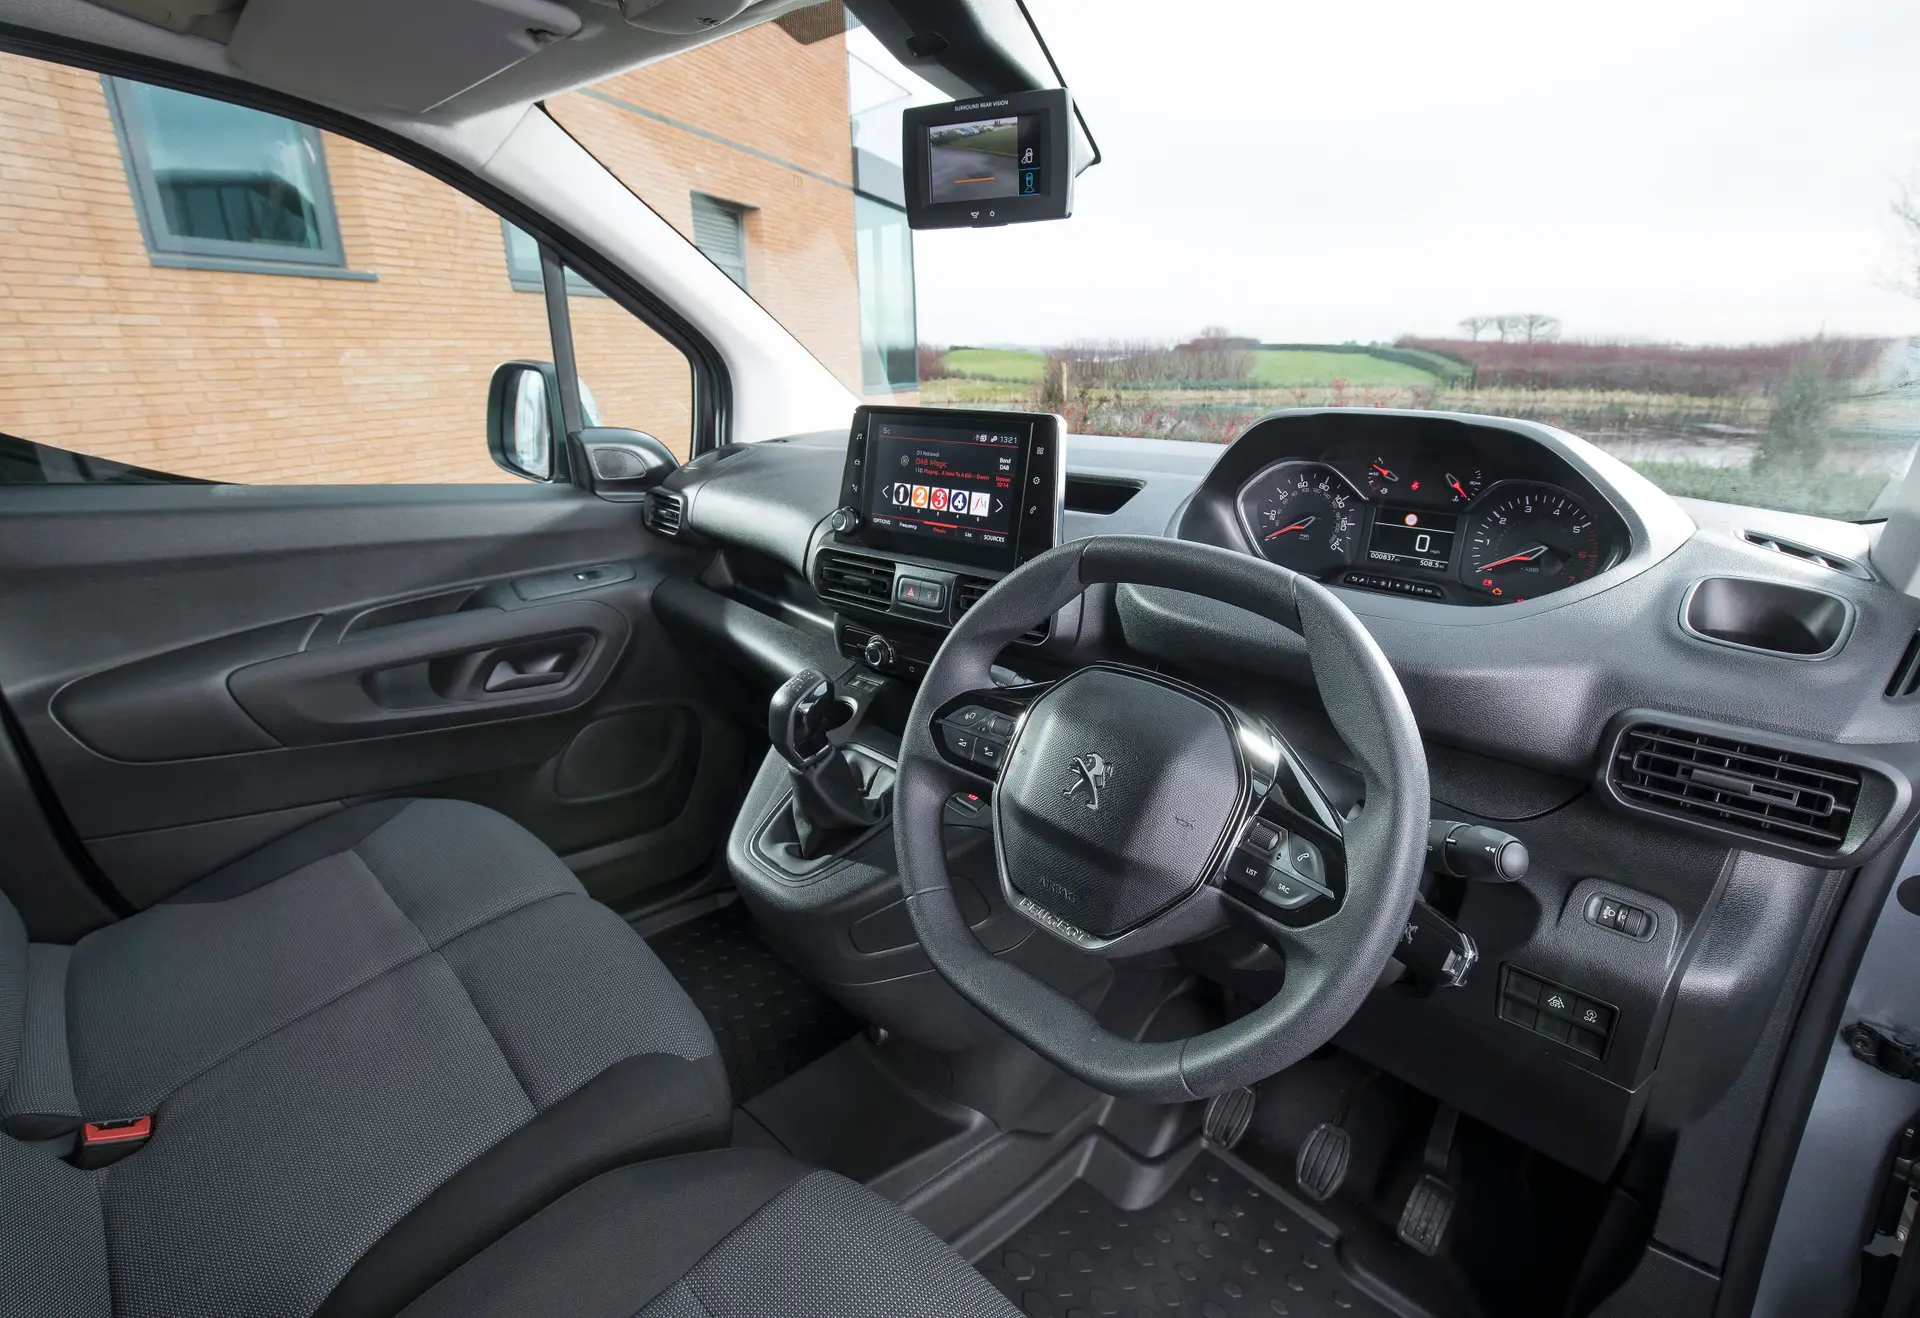 Peugeot Partner Front Interior